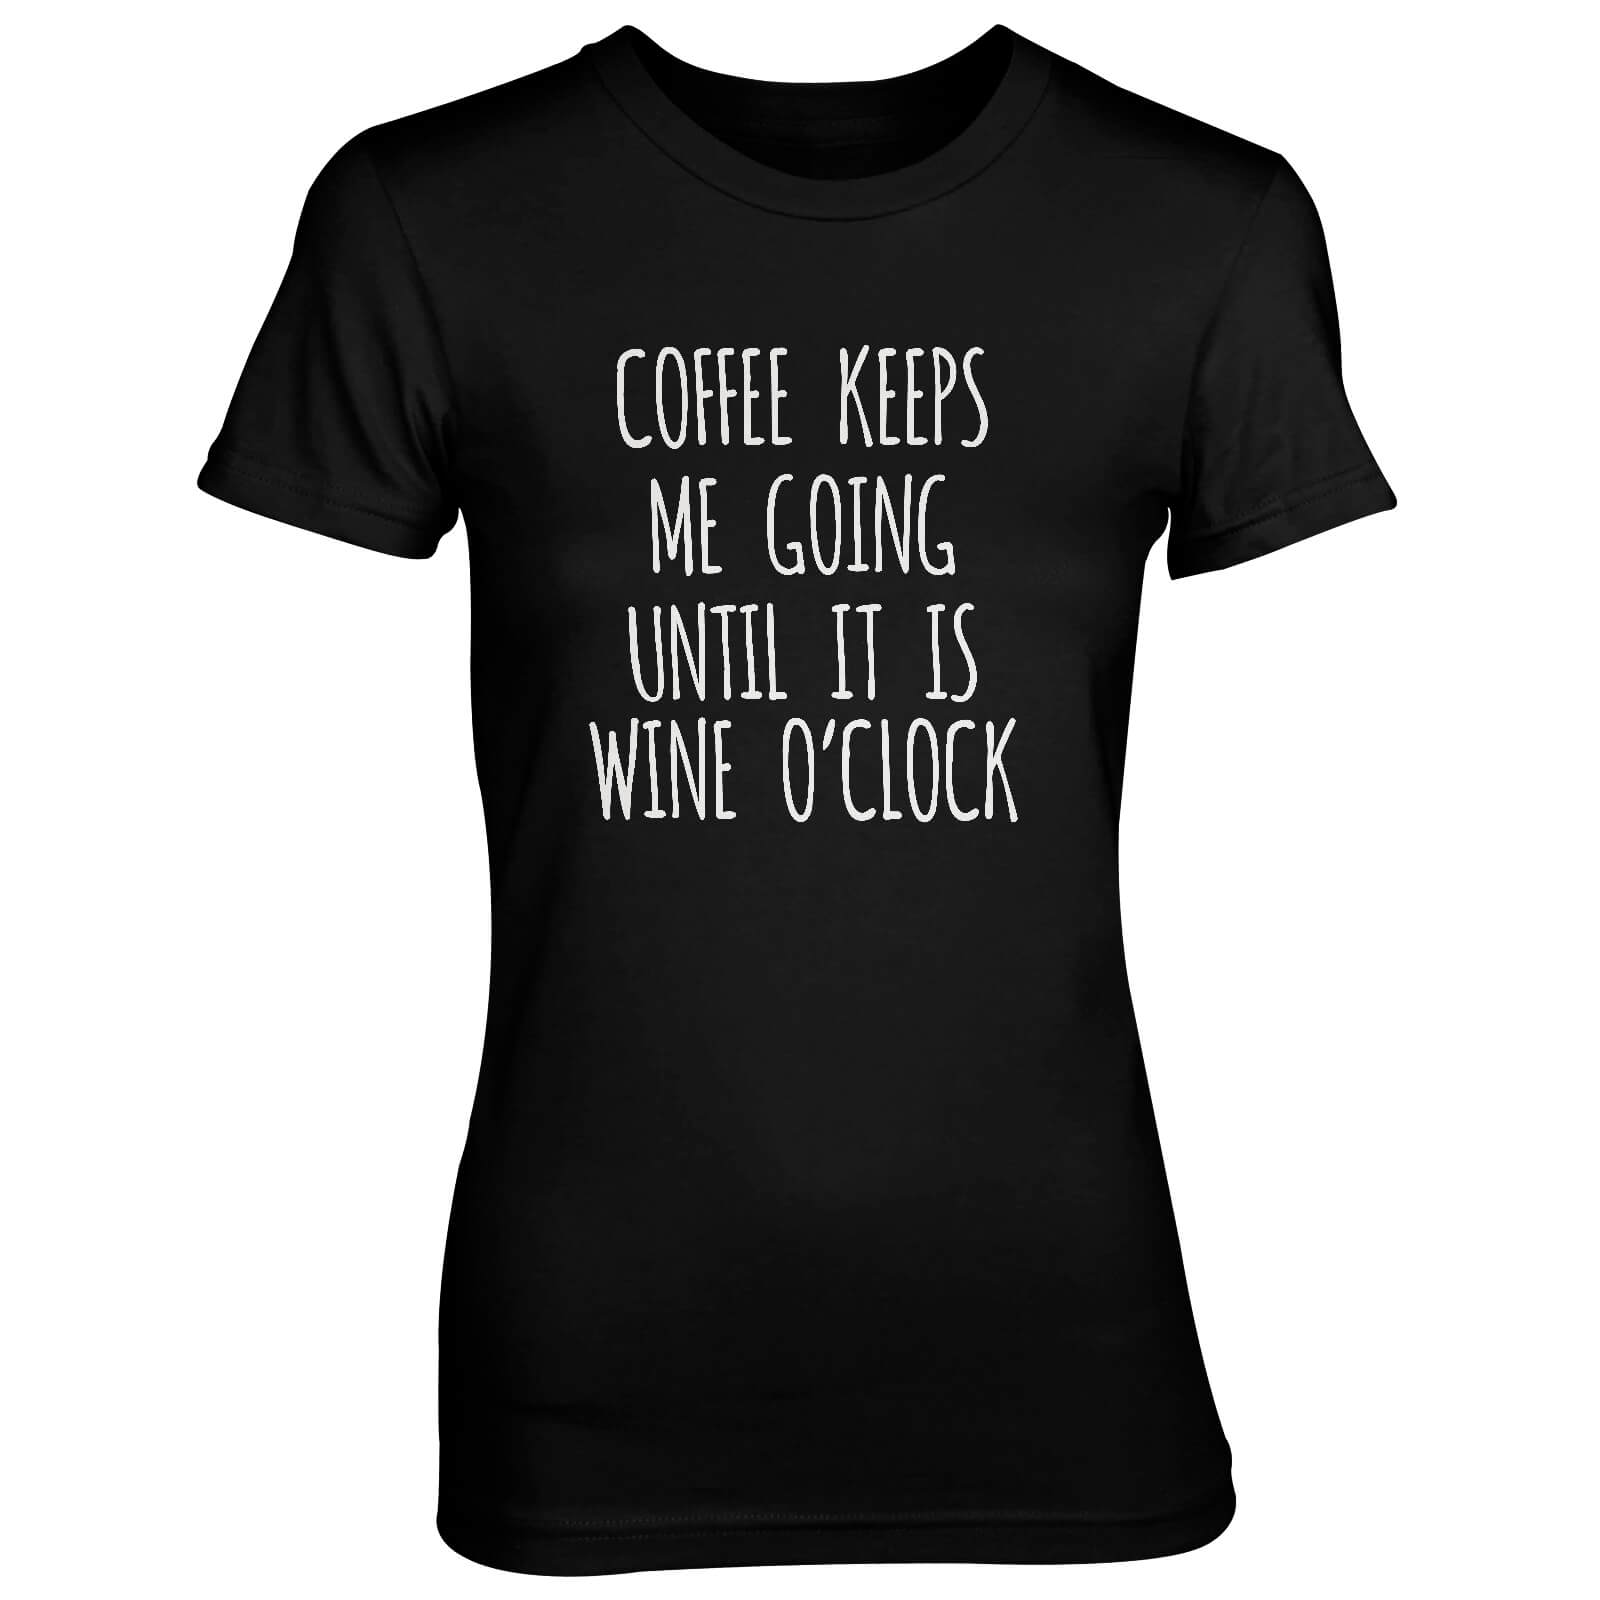 Coffee Keeps Me Going Until It's Wine O'Clock Women's Black T-Shirt - S - Black